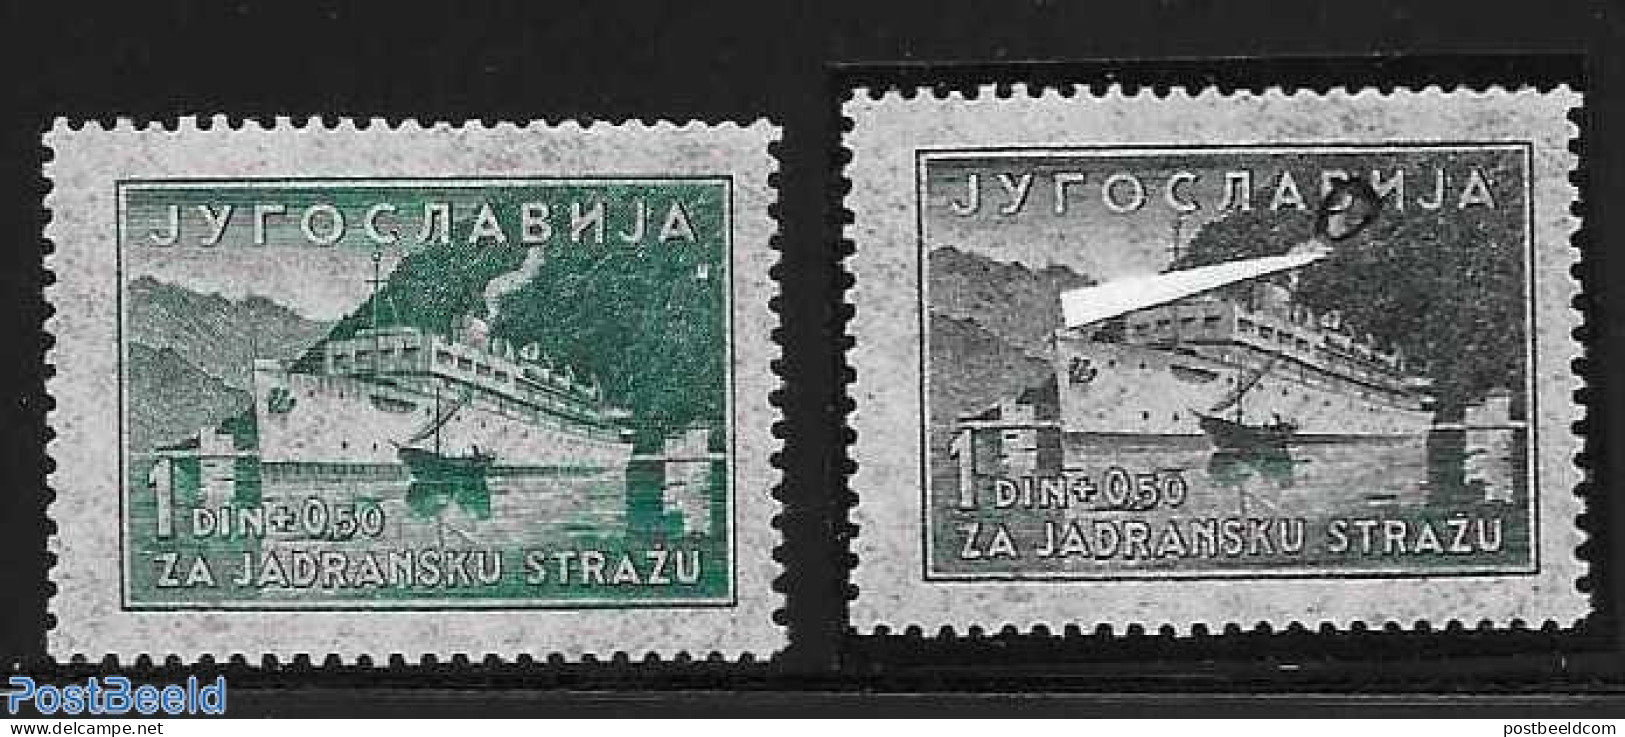 Yugoslavia 1939 Ships, Mint NH, Transport - Ships And Boats - Ungebraucht